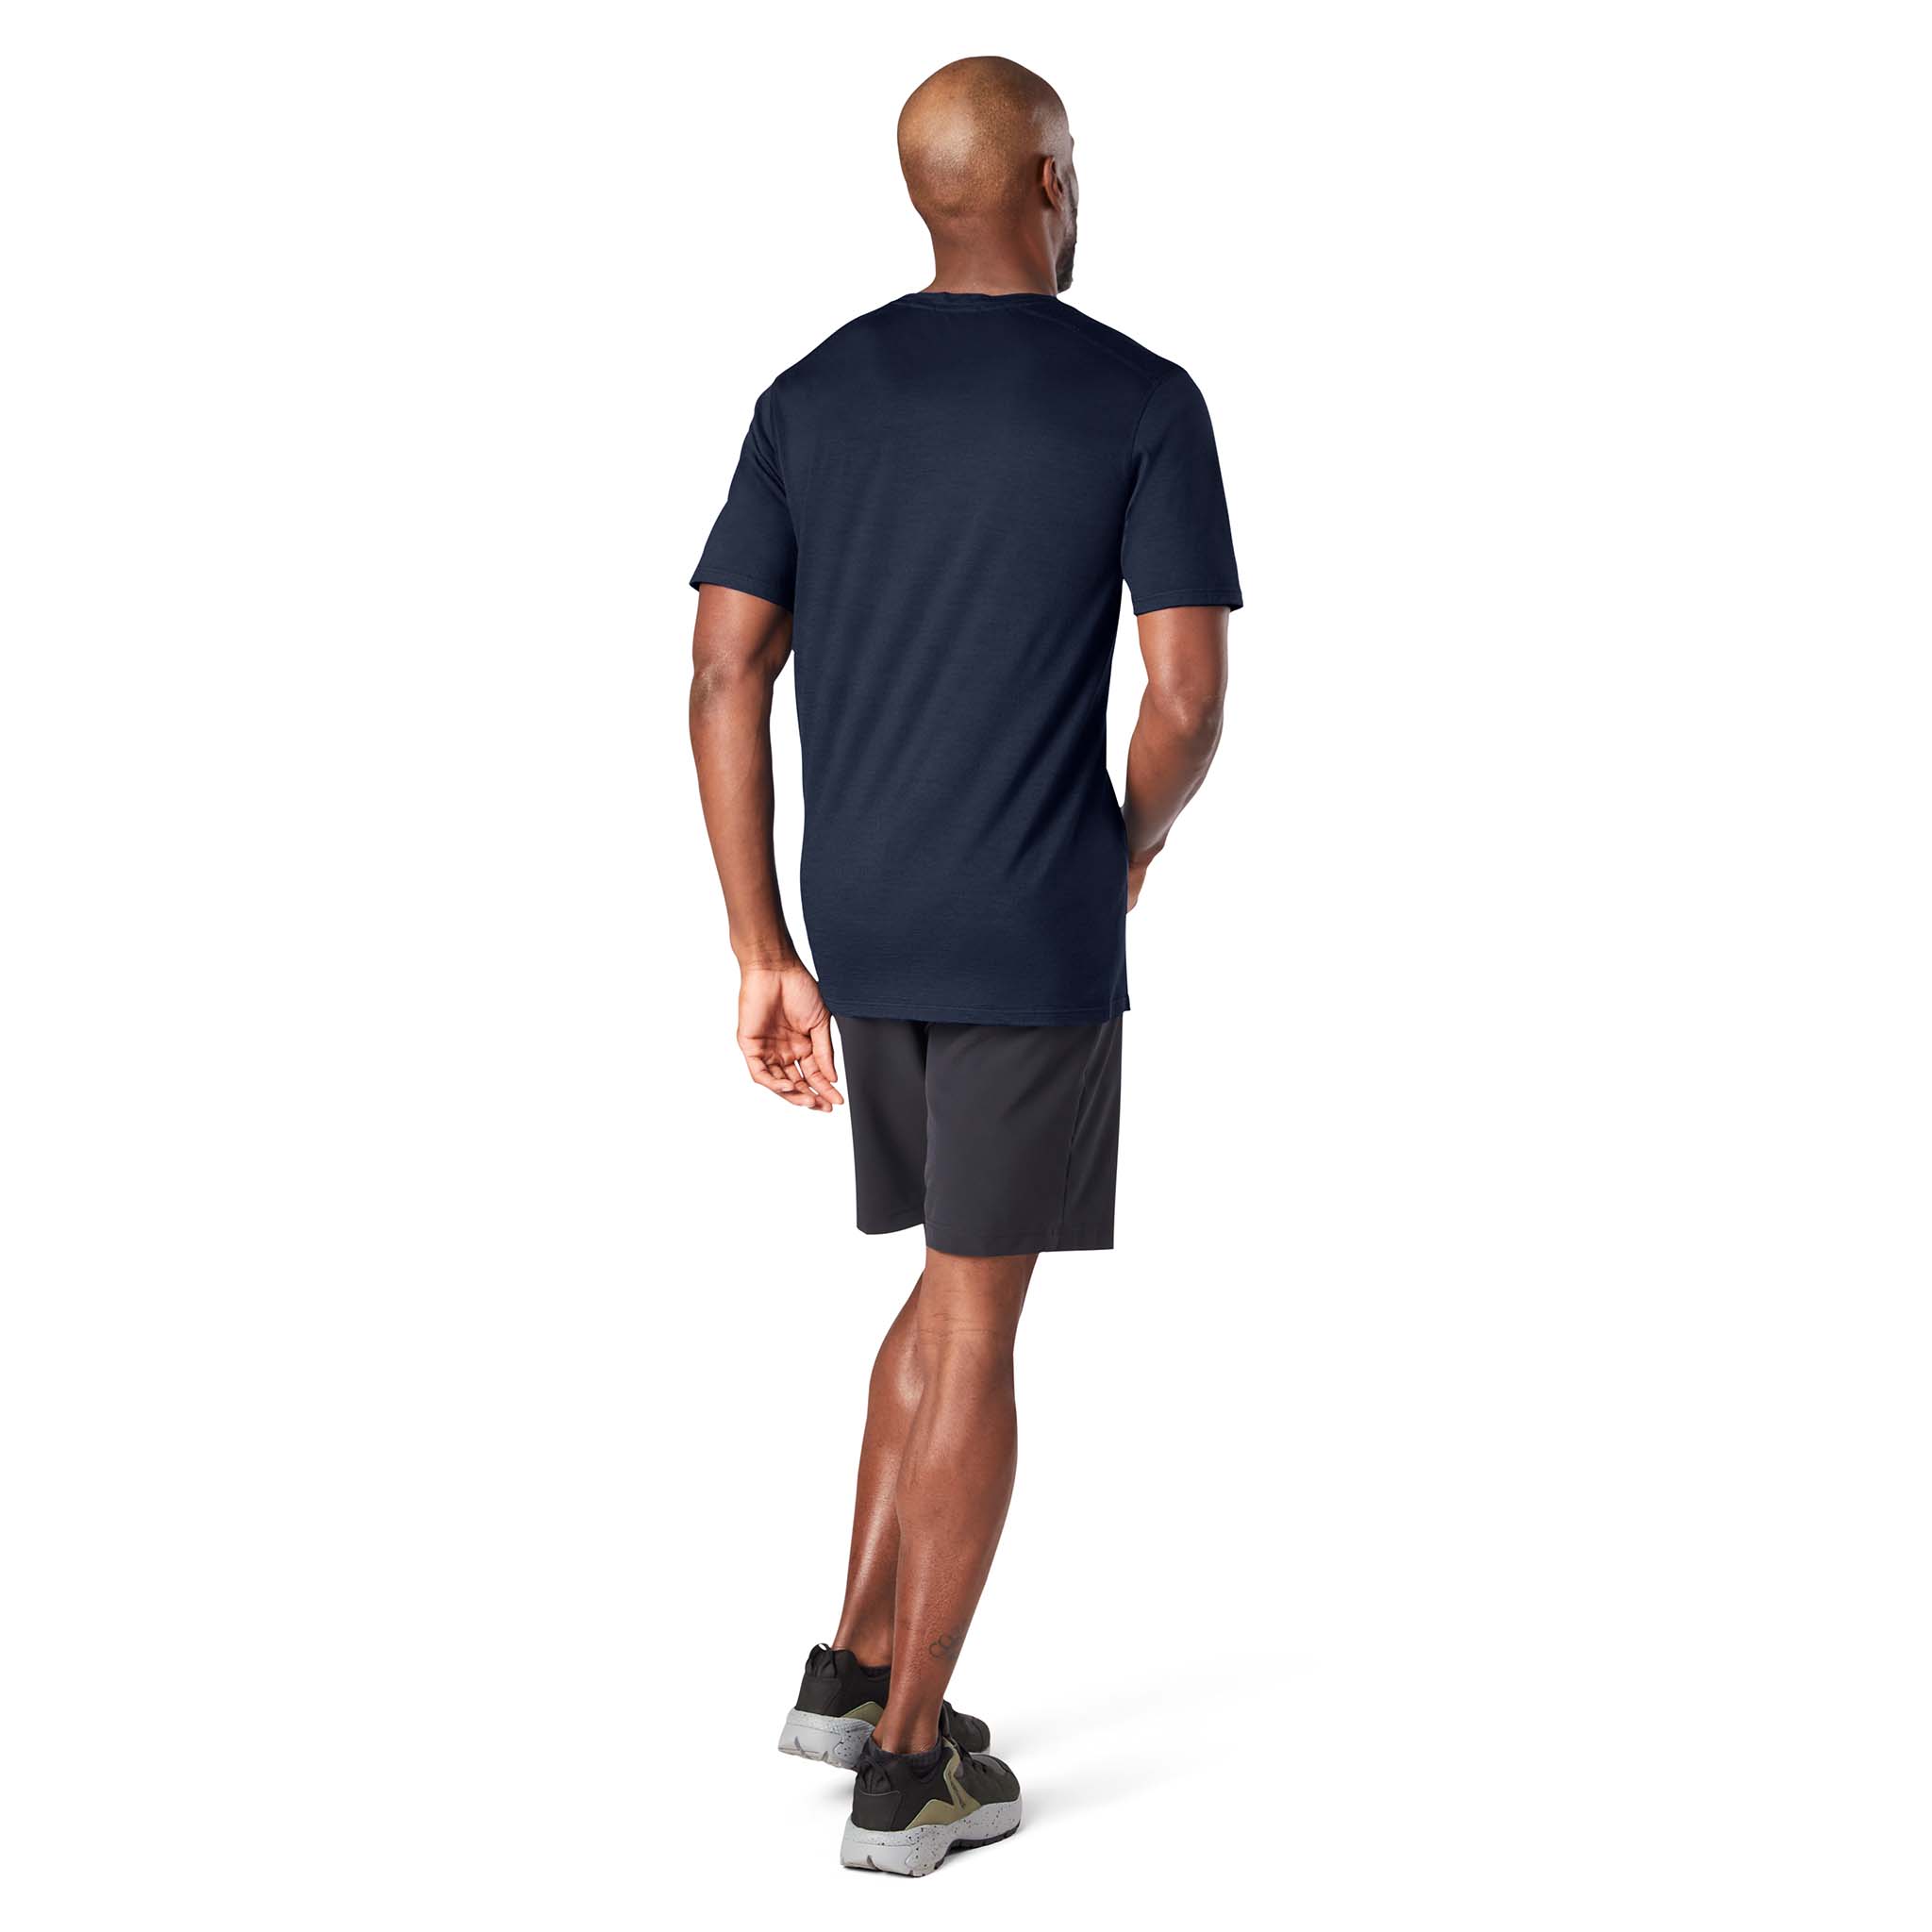 Smartwool Men's Merino 150 Base Layer Short Sleeve T-shirt